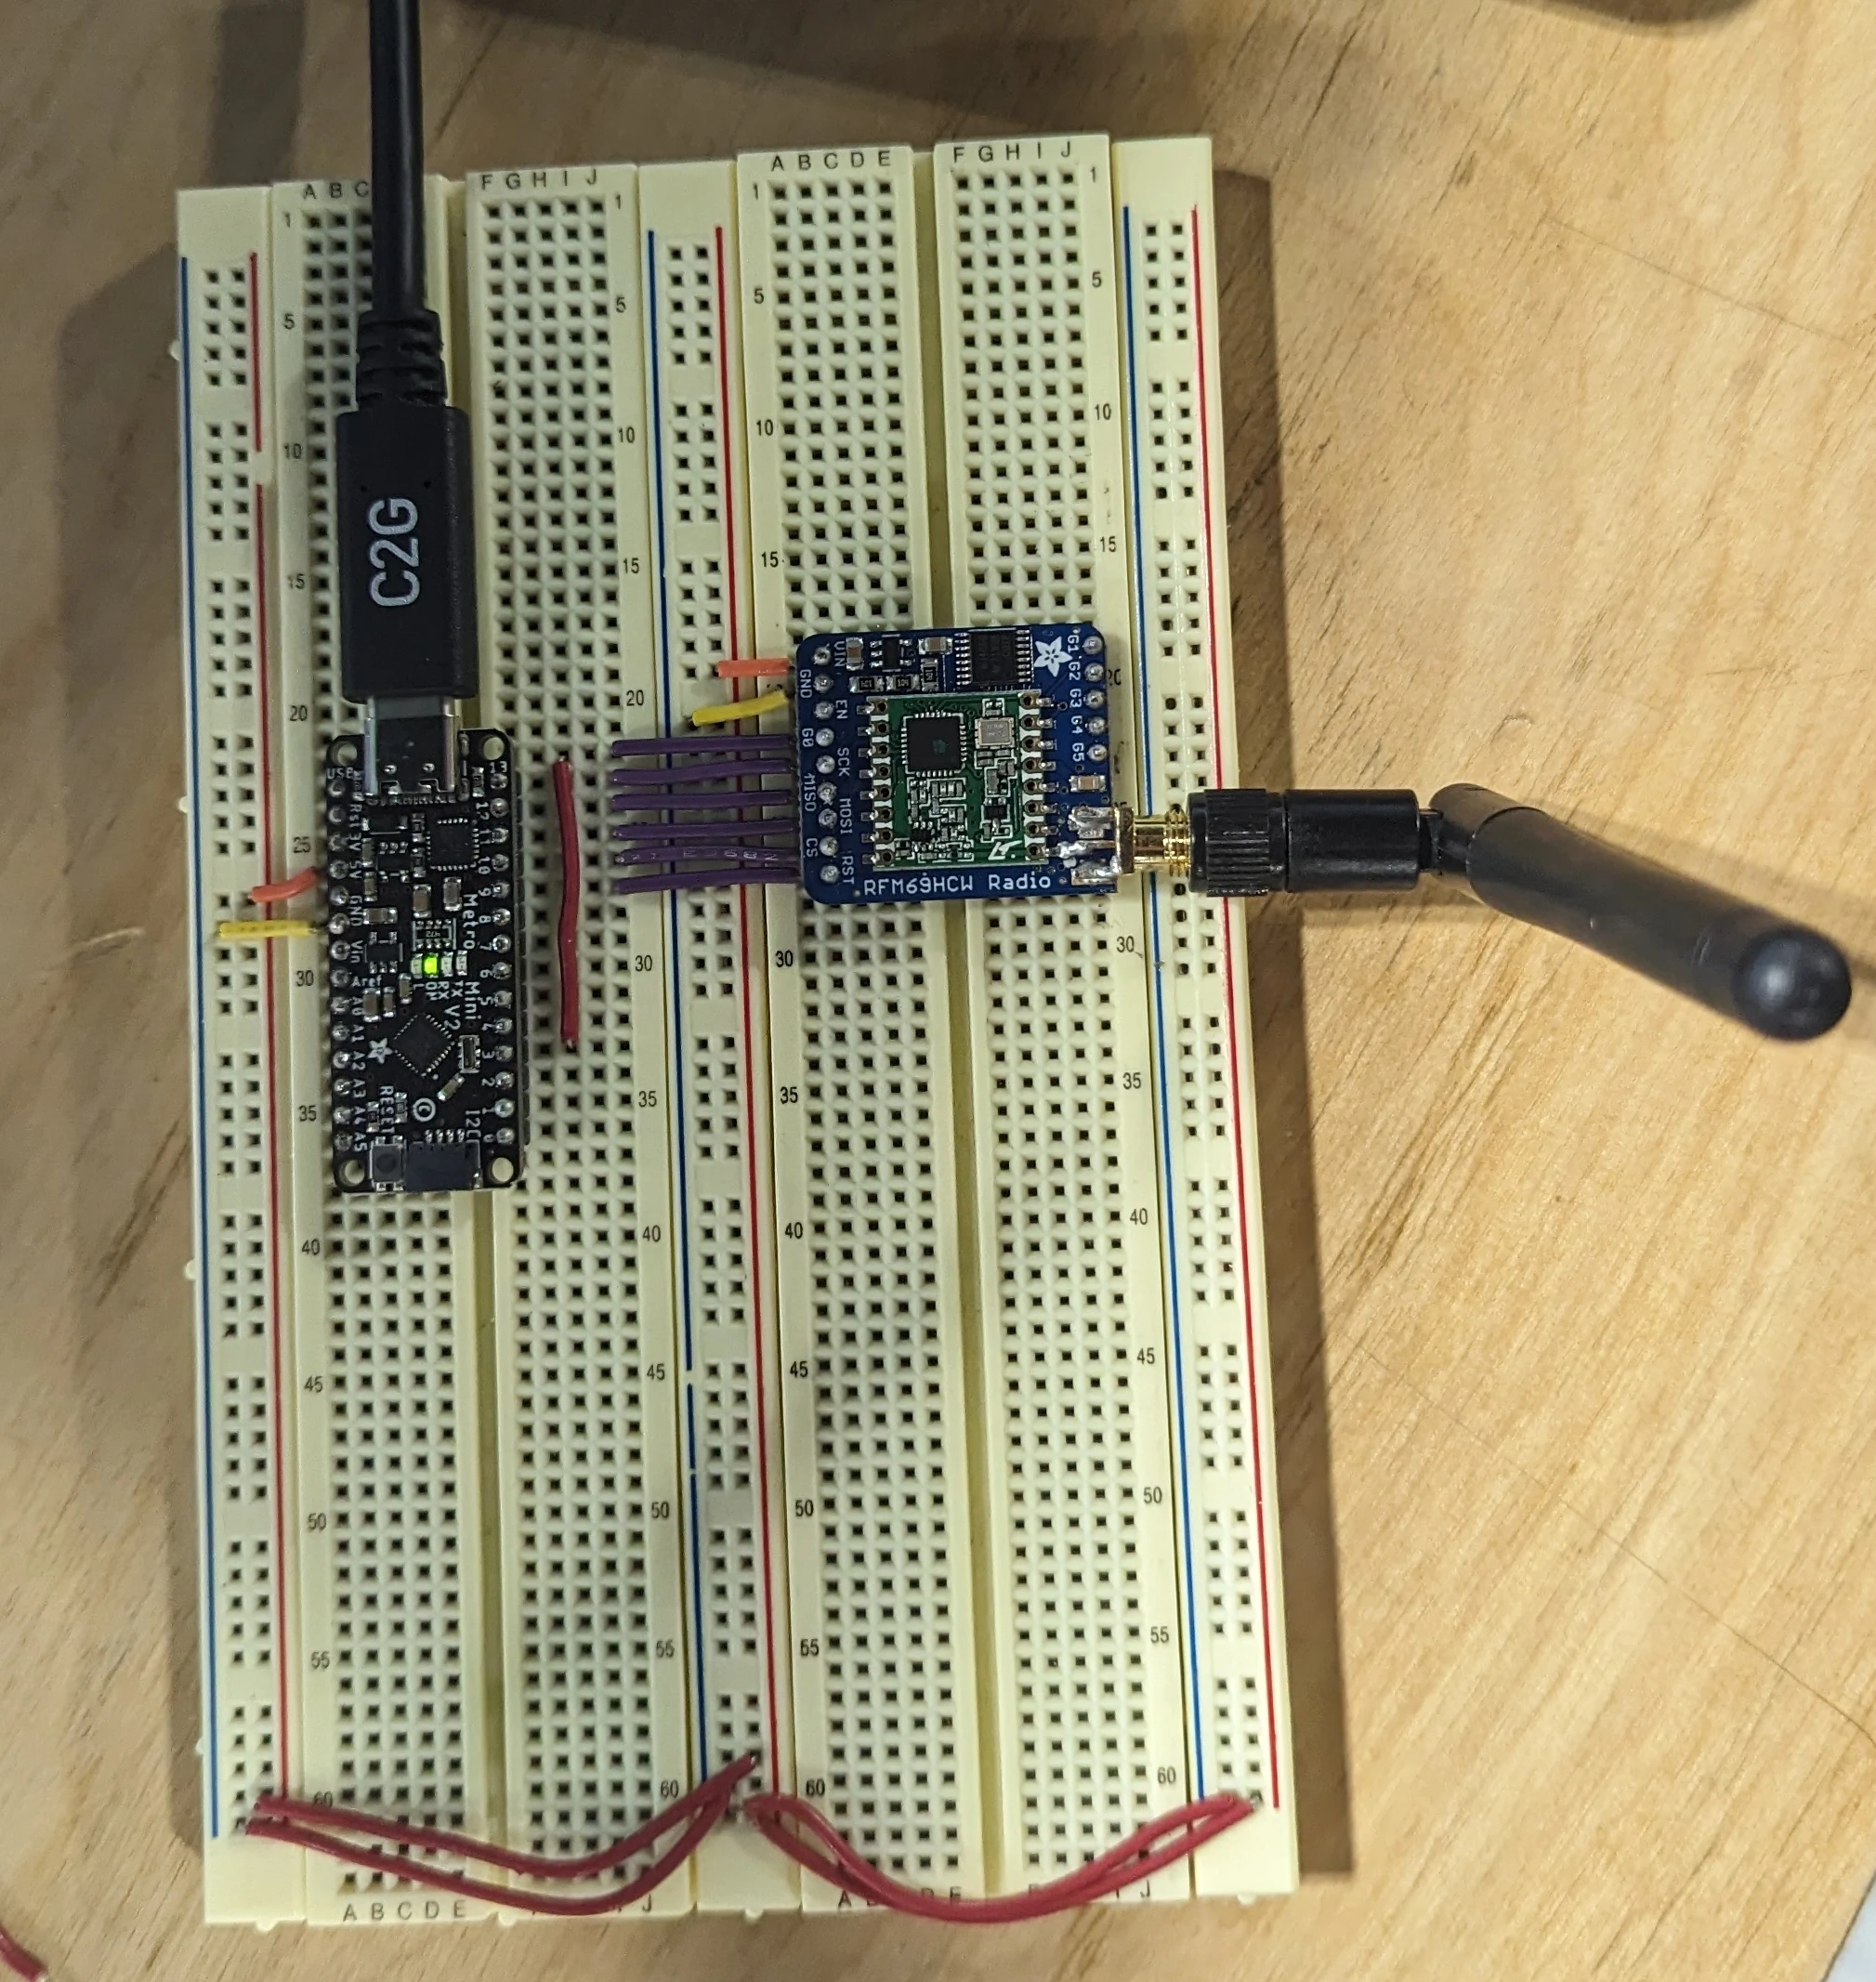 Image of wired breadboard with RFM69HCW radio and Adafruit Metro Mini Microcontroller